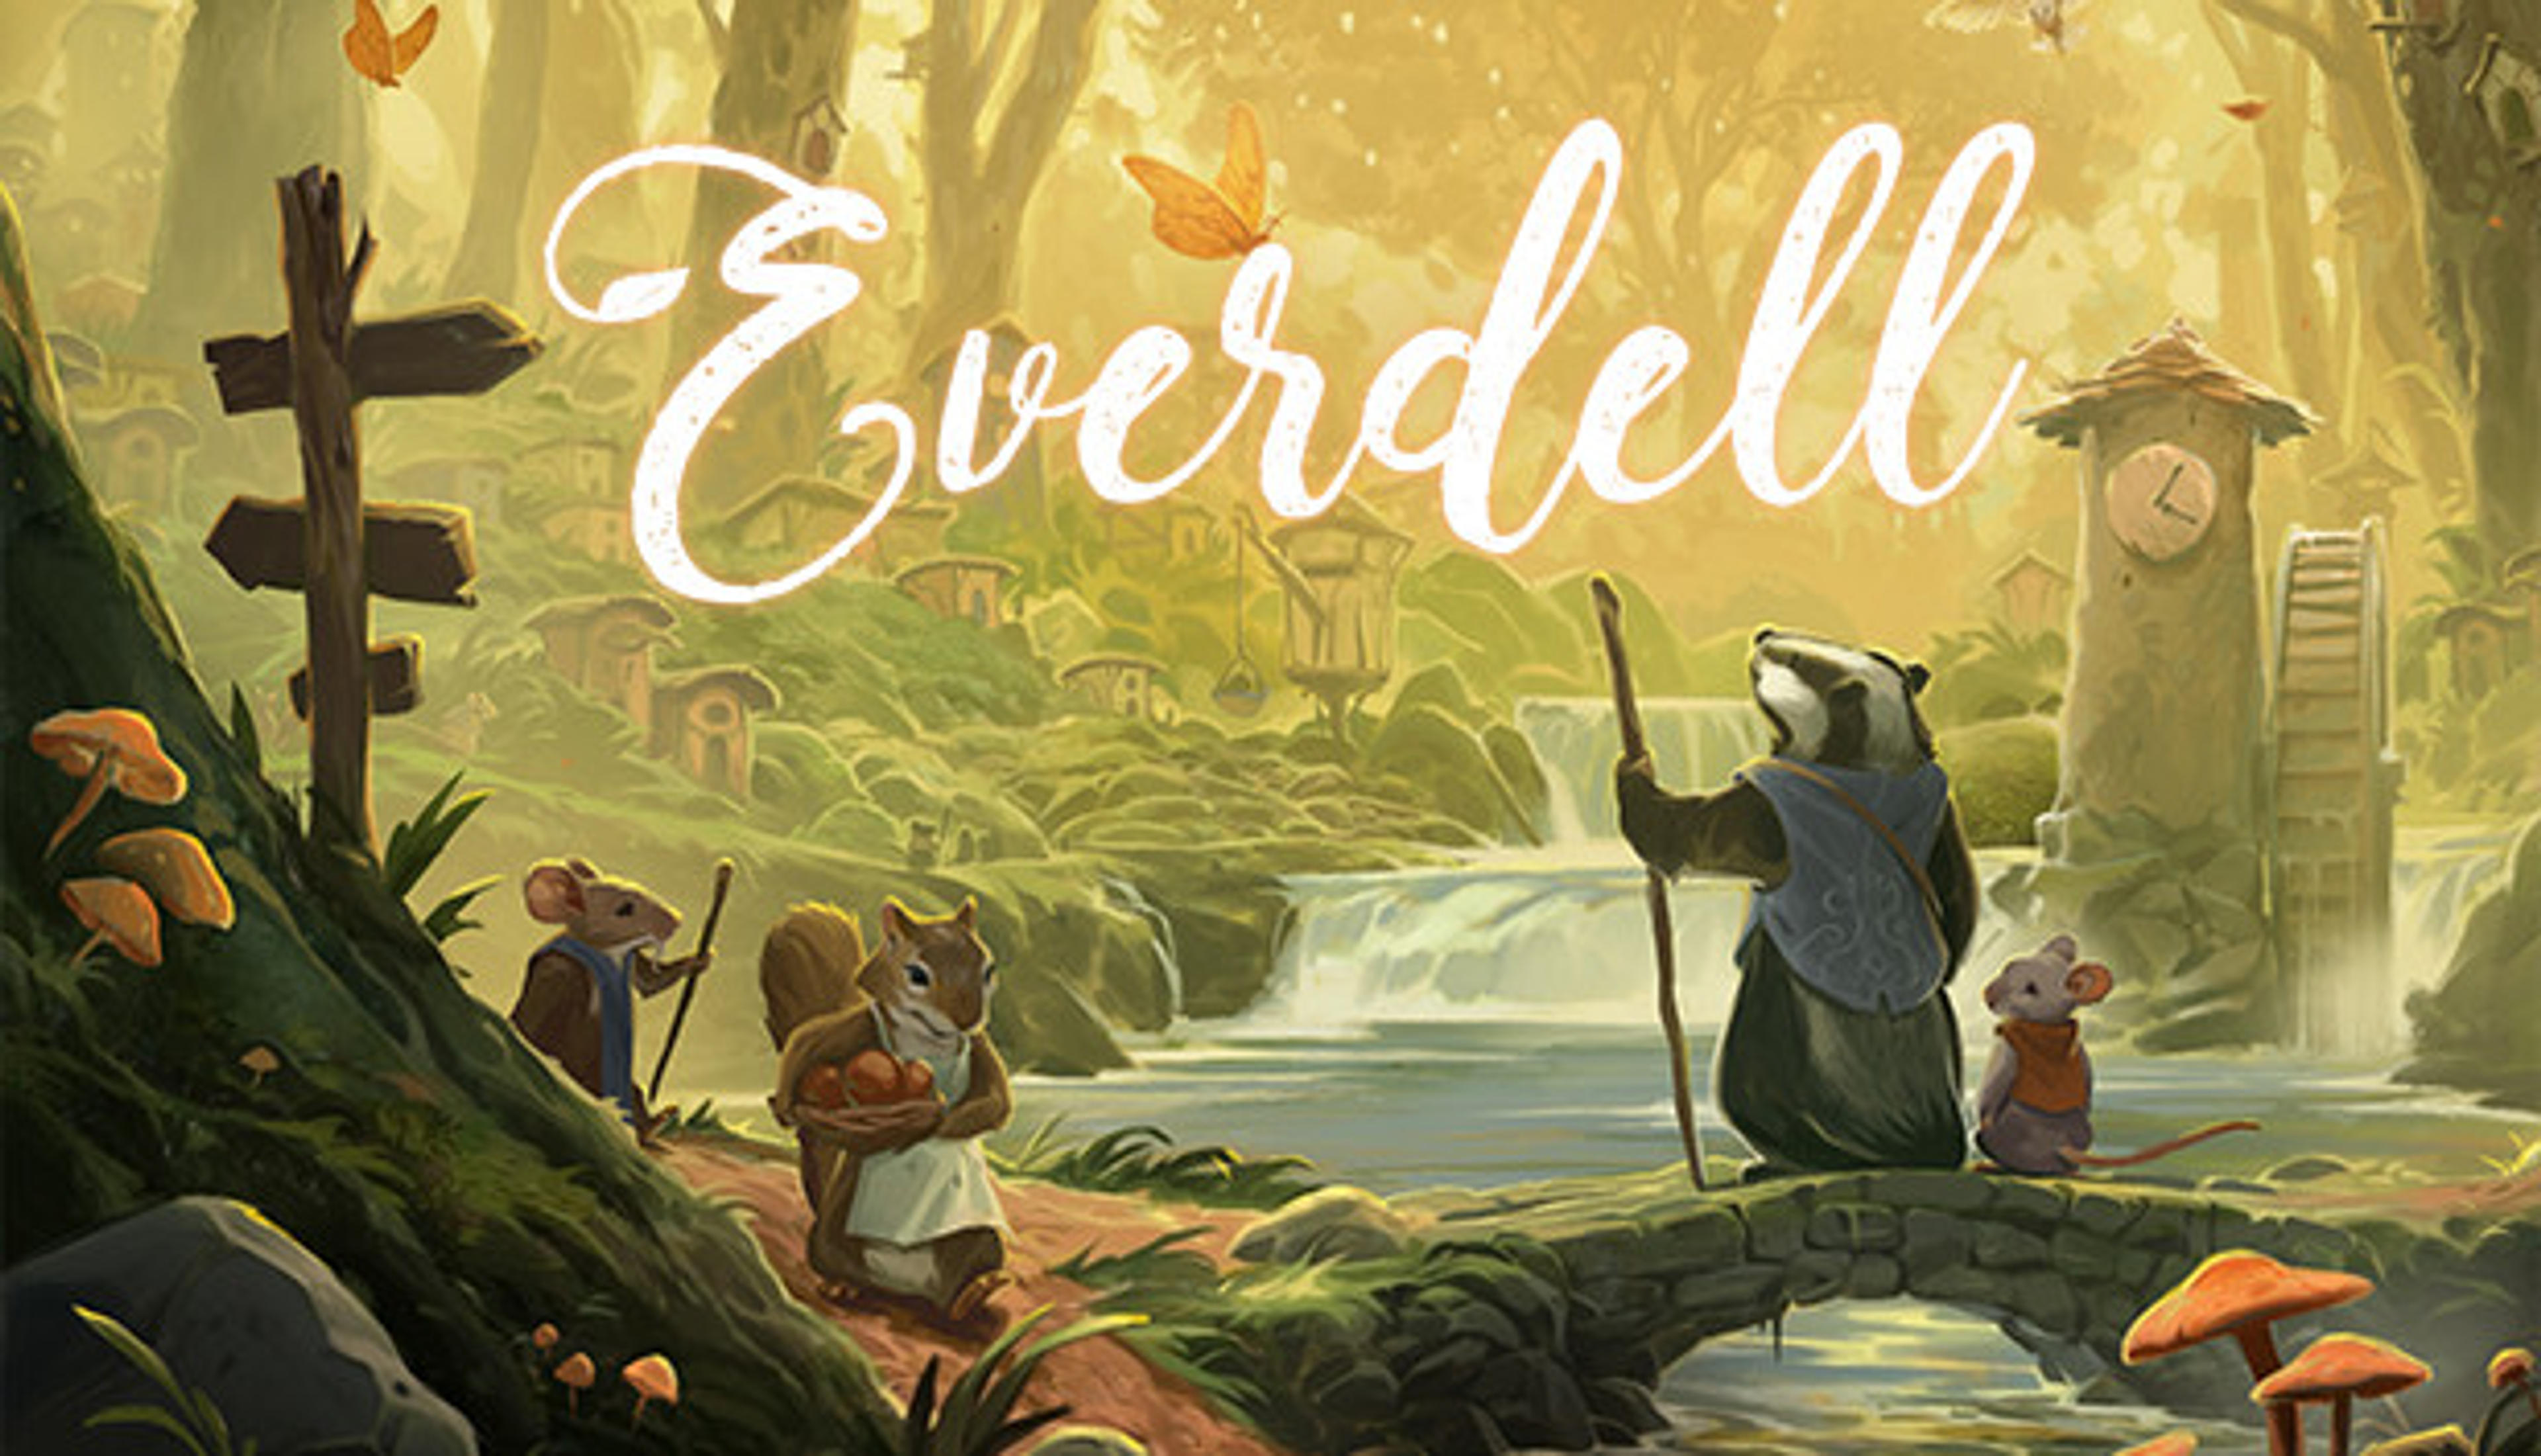 Everdell on Steam